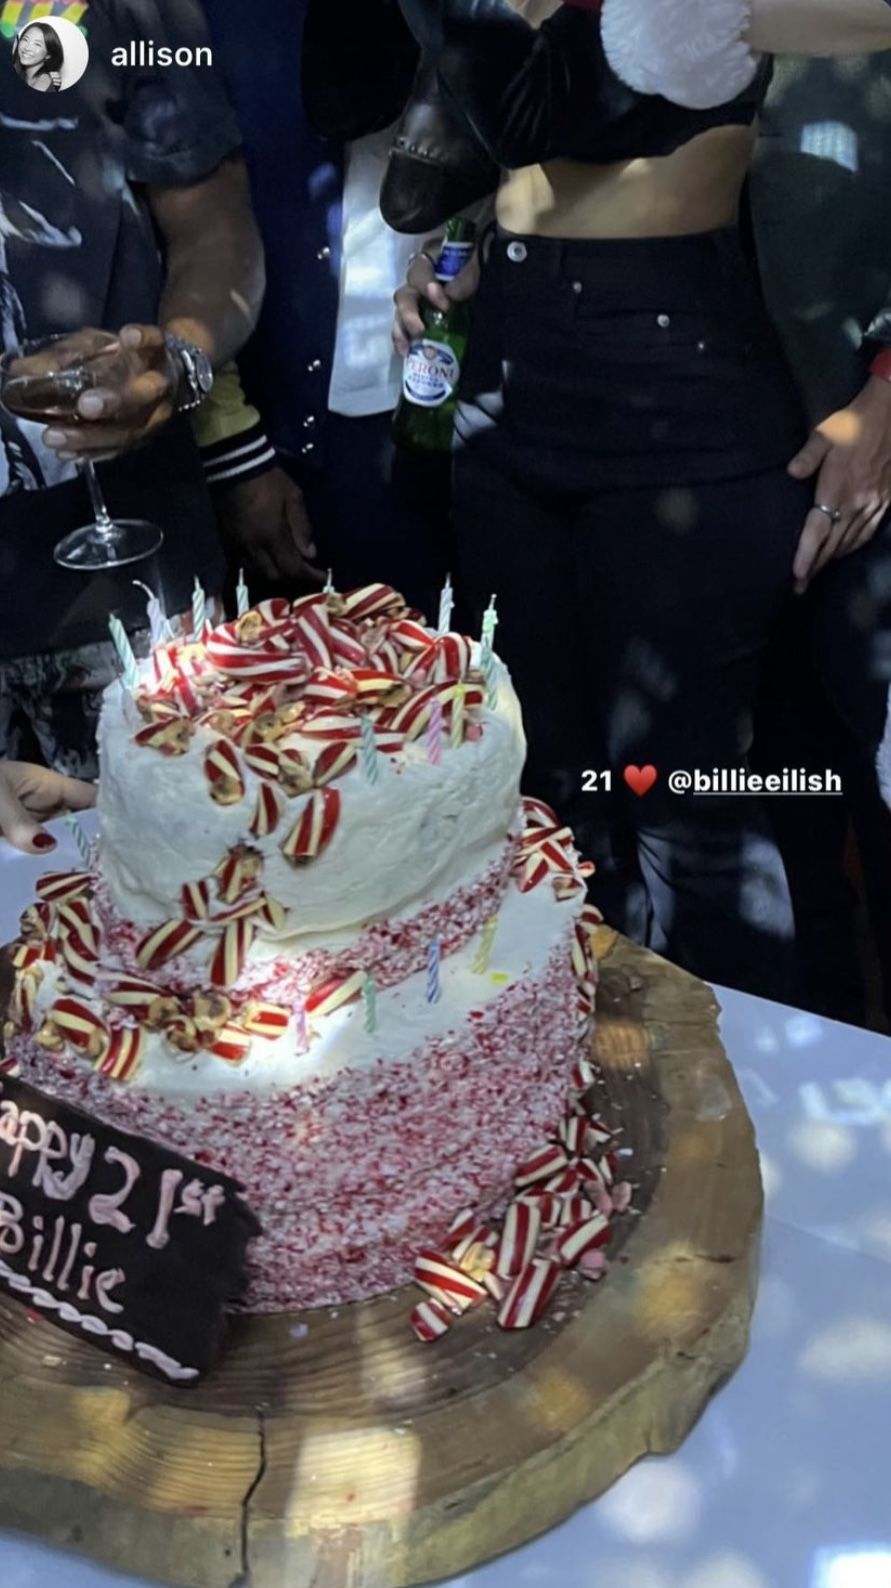 billie eilish's 21st birthday cake